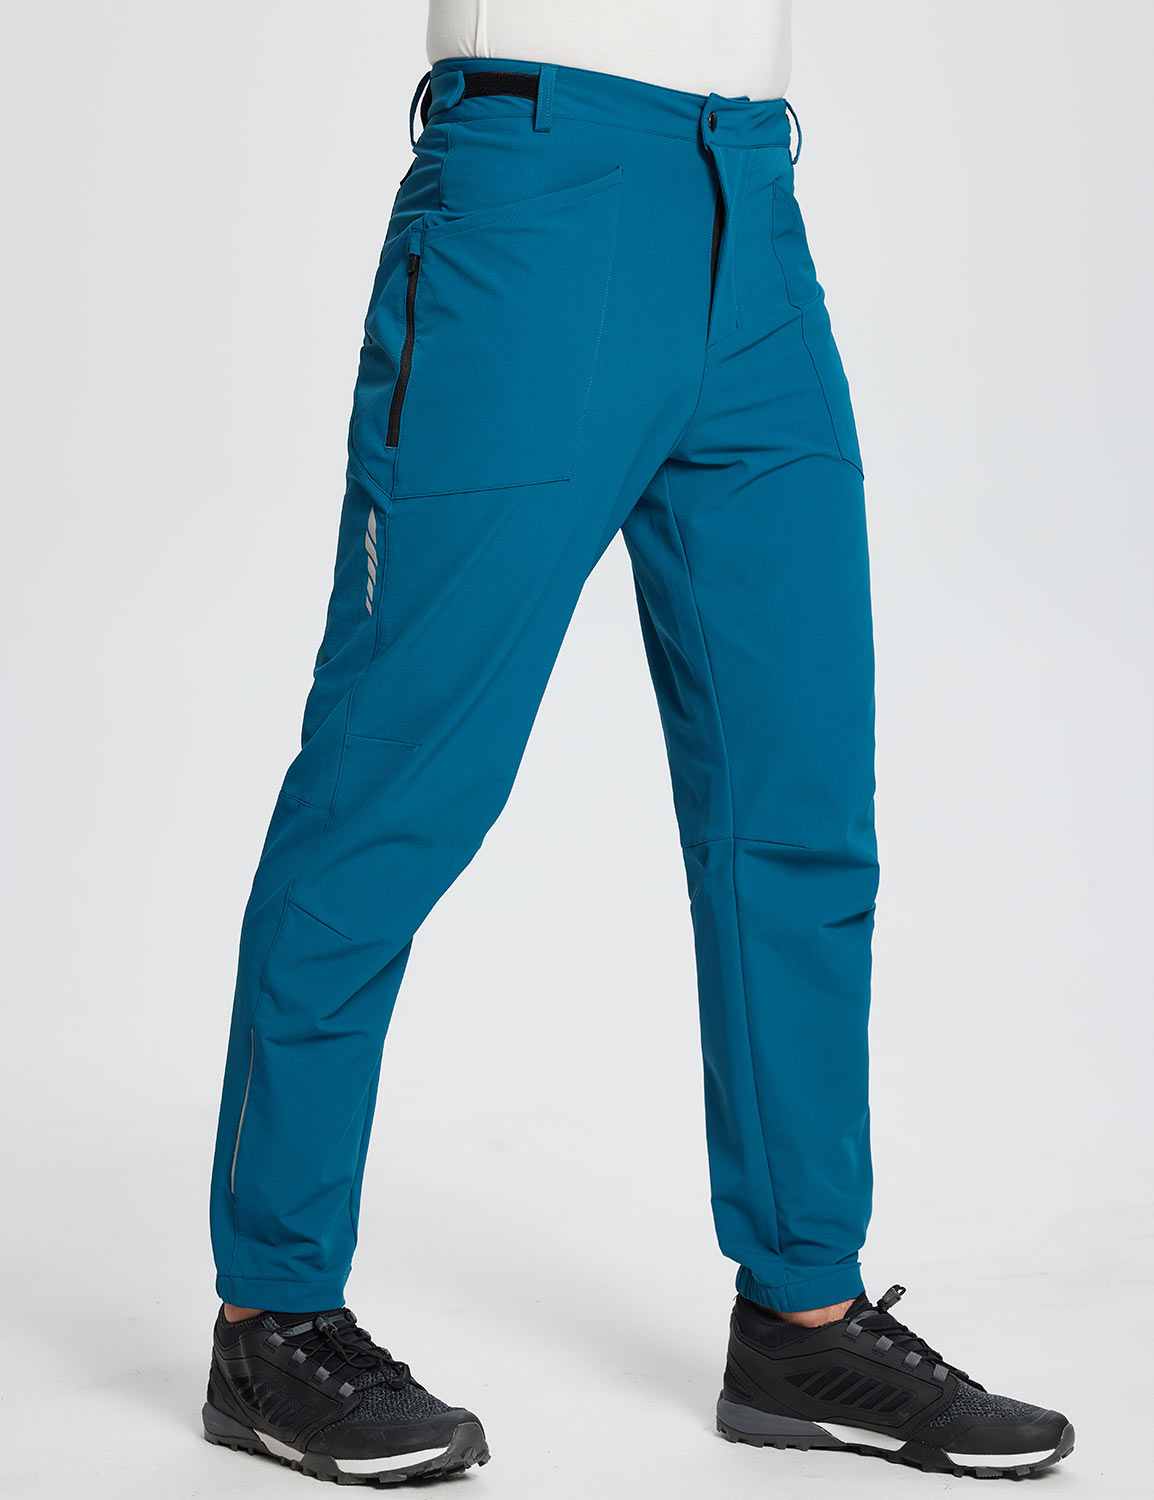 Baleaf Men's Flyleaf Water-Resistant Pocketed Cycling Pants dai039 Corsair Side